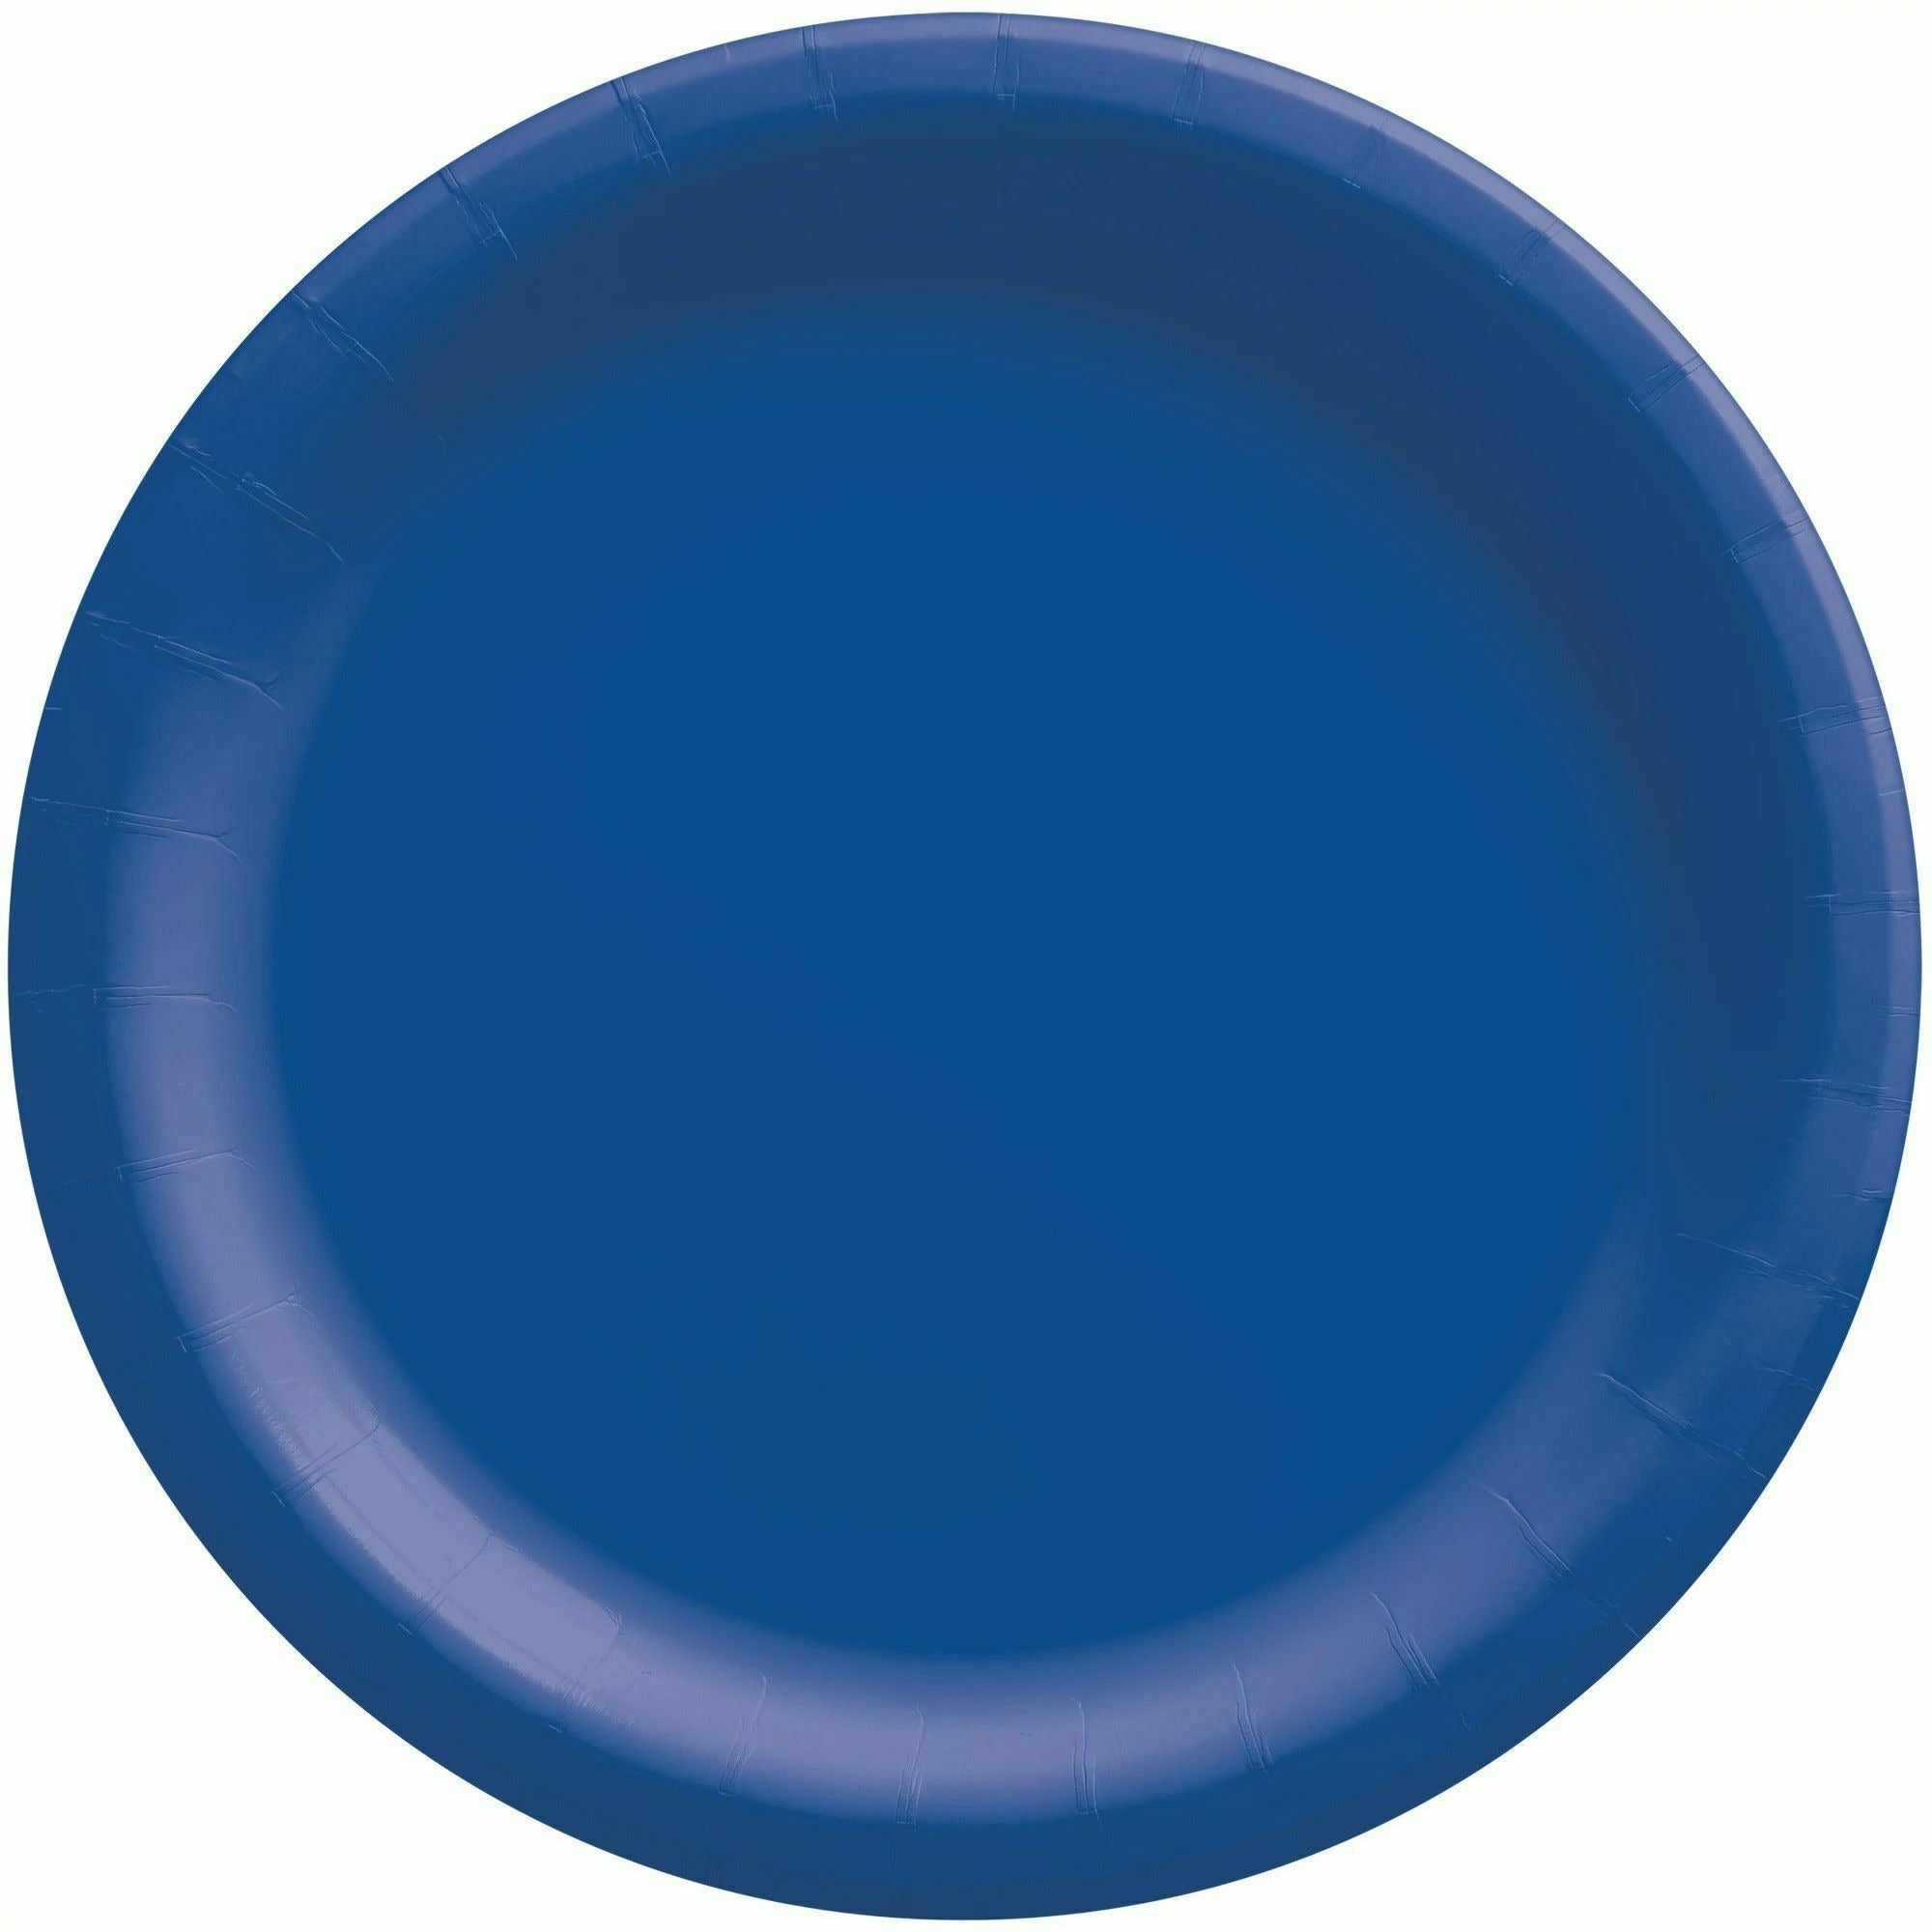 Amscan BASIC Bright Royal Blue - 10" Round Paper Plates, 50 Ct.